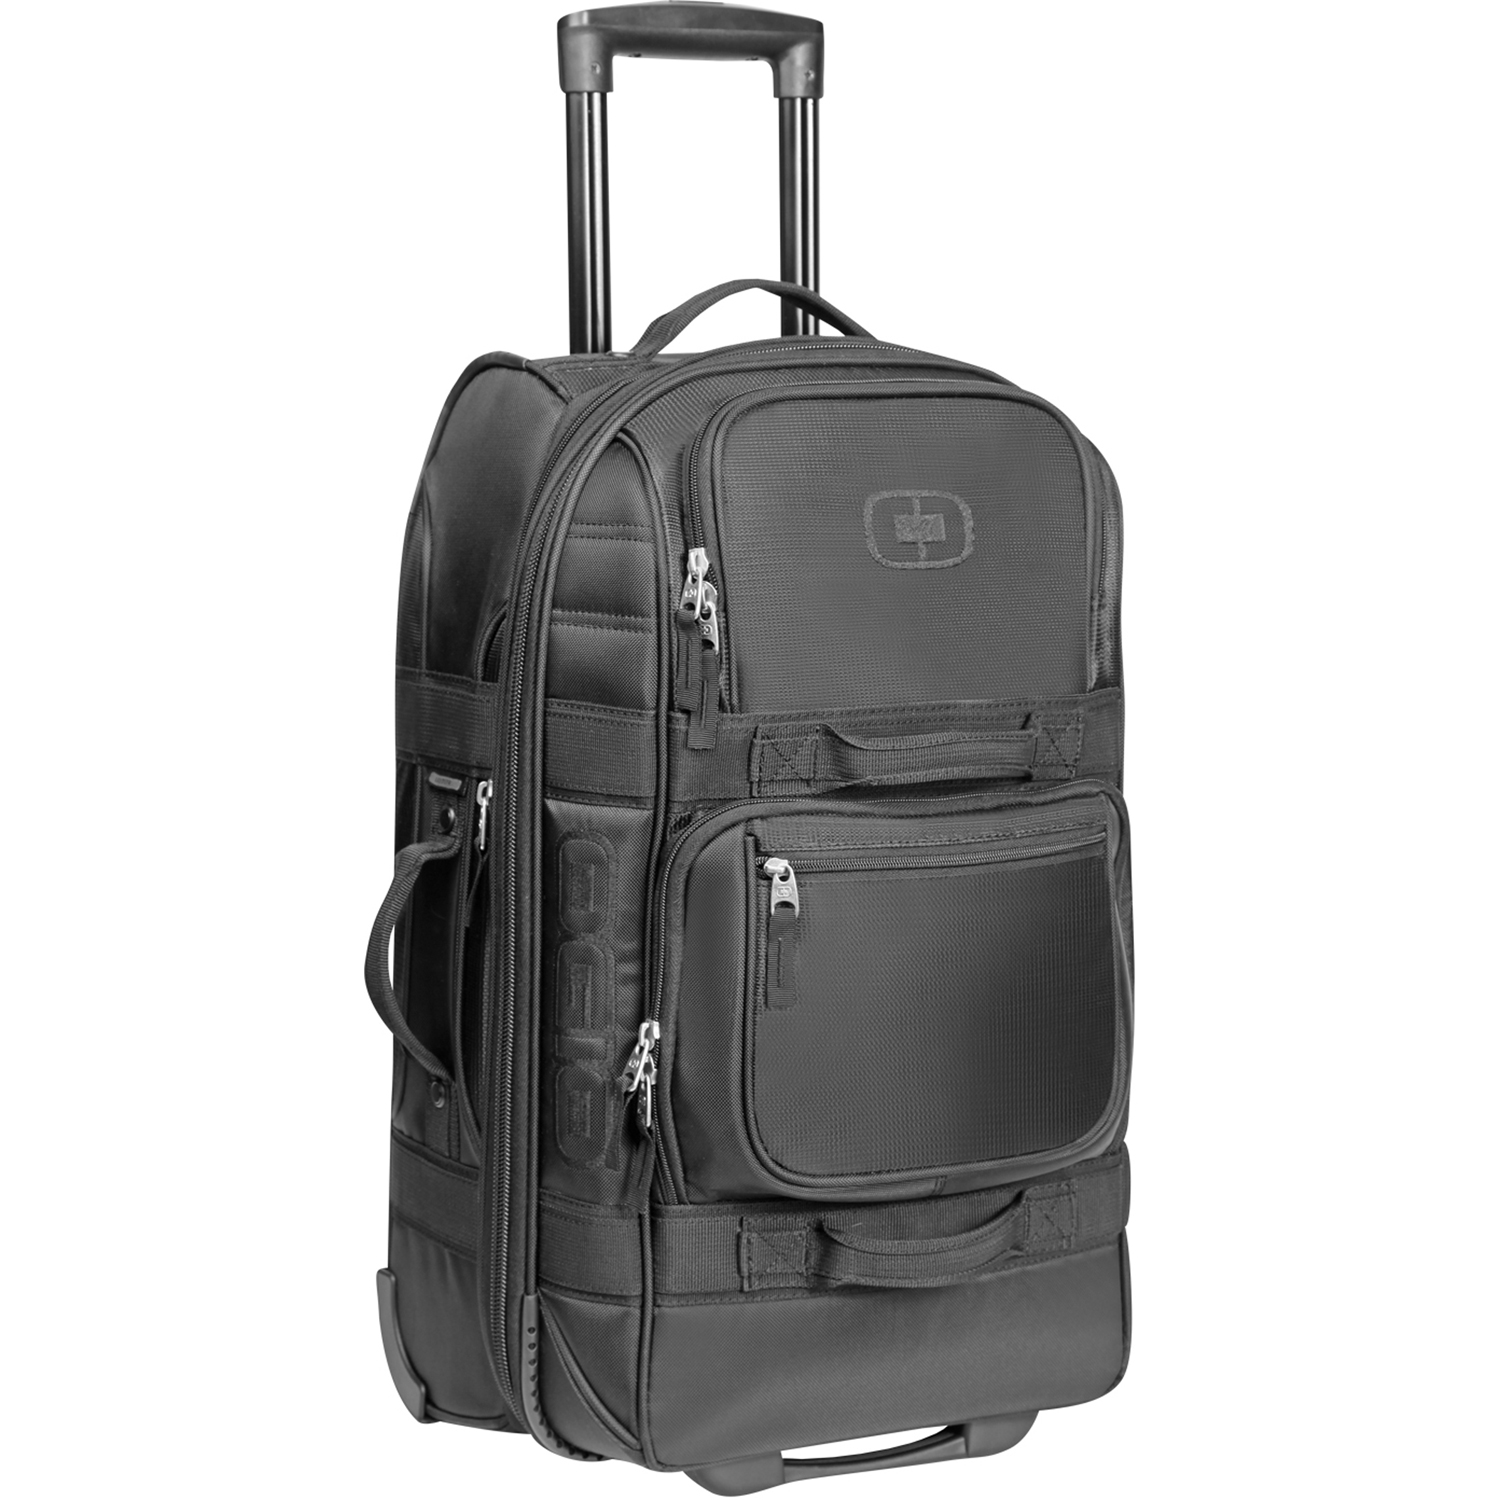 Ogio Layover Travel Bag. OGIO Layover Travel Bag (Stealth